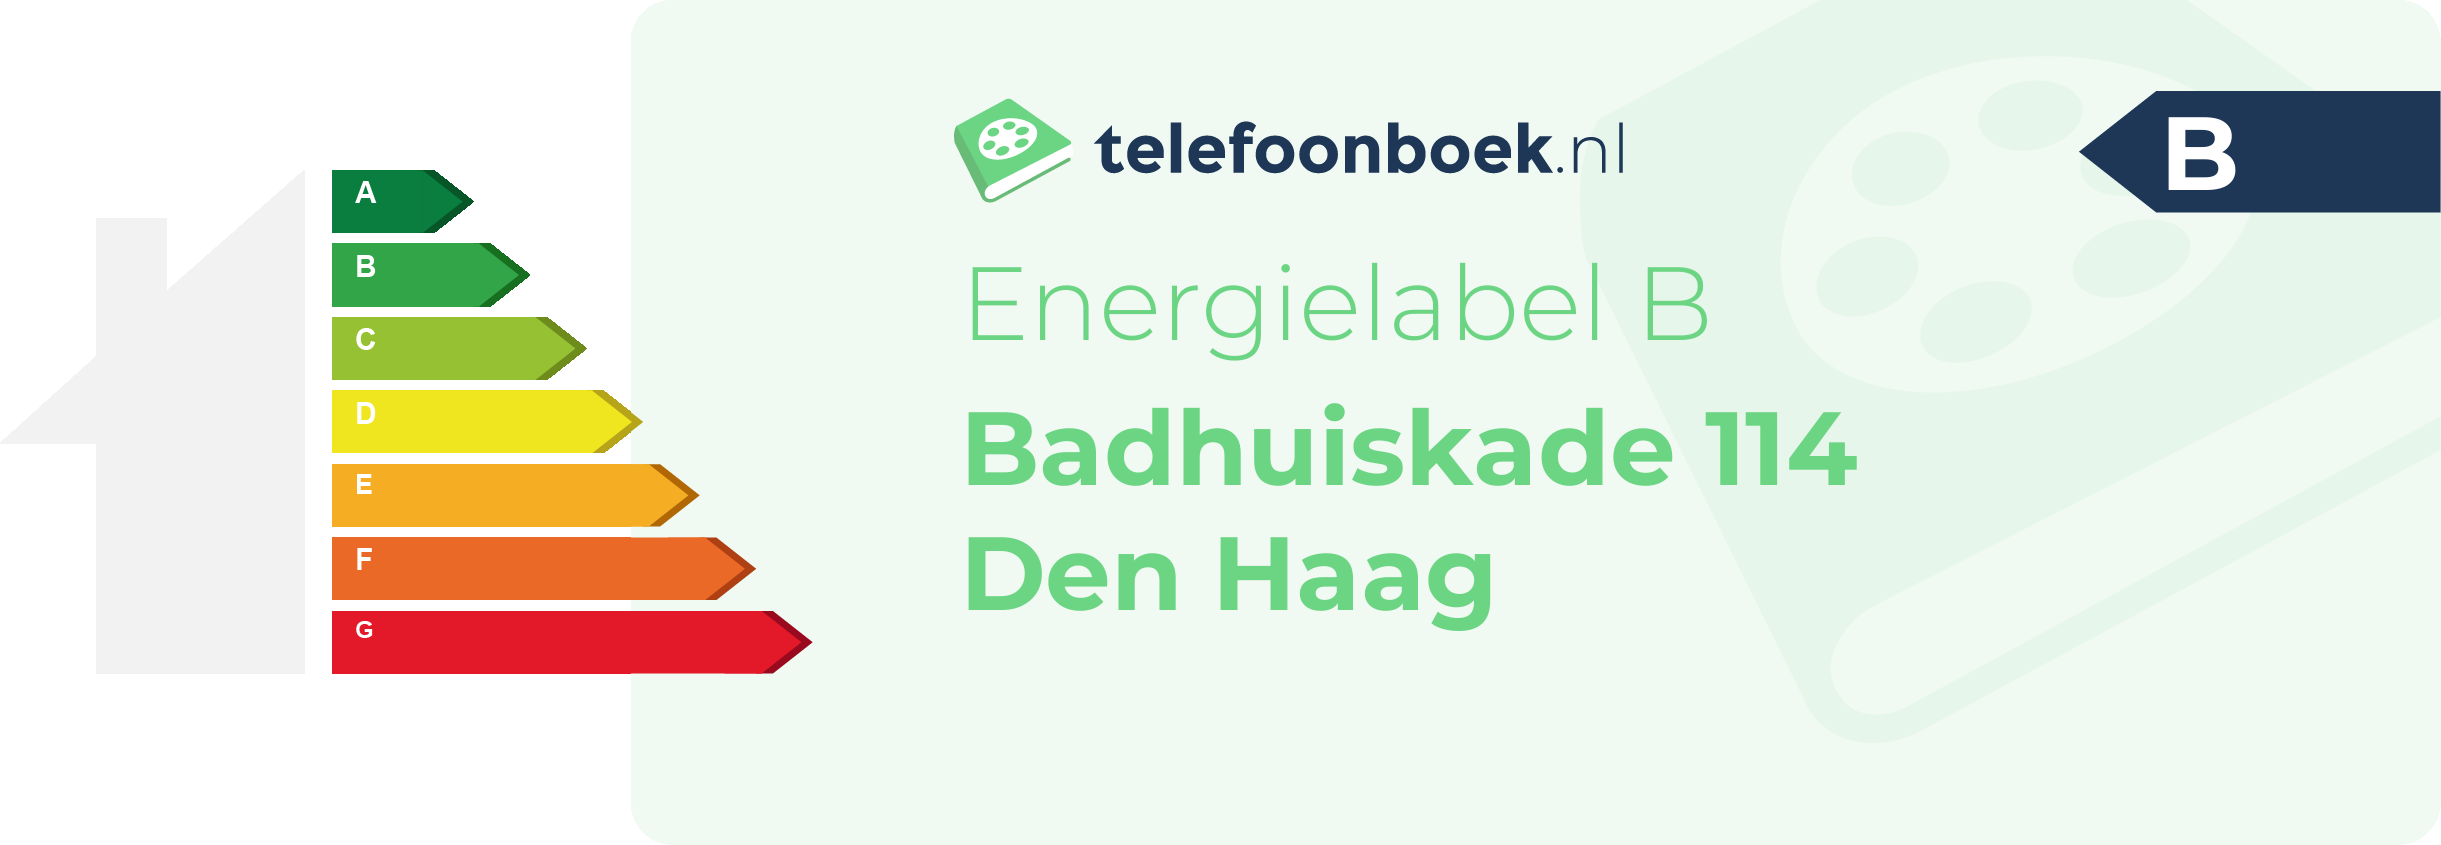 Energielabel Badhuiskade 114 Den Haag